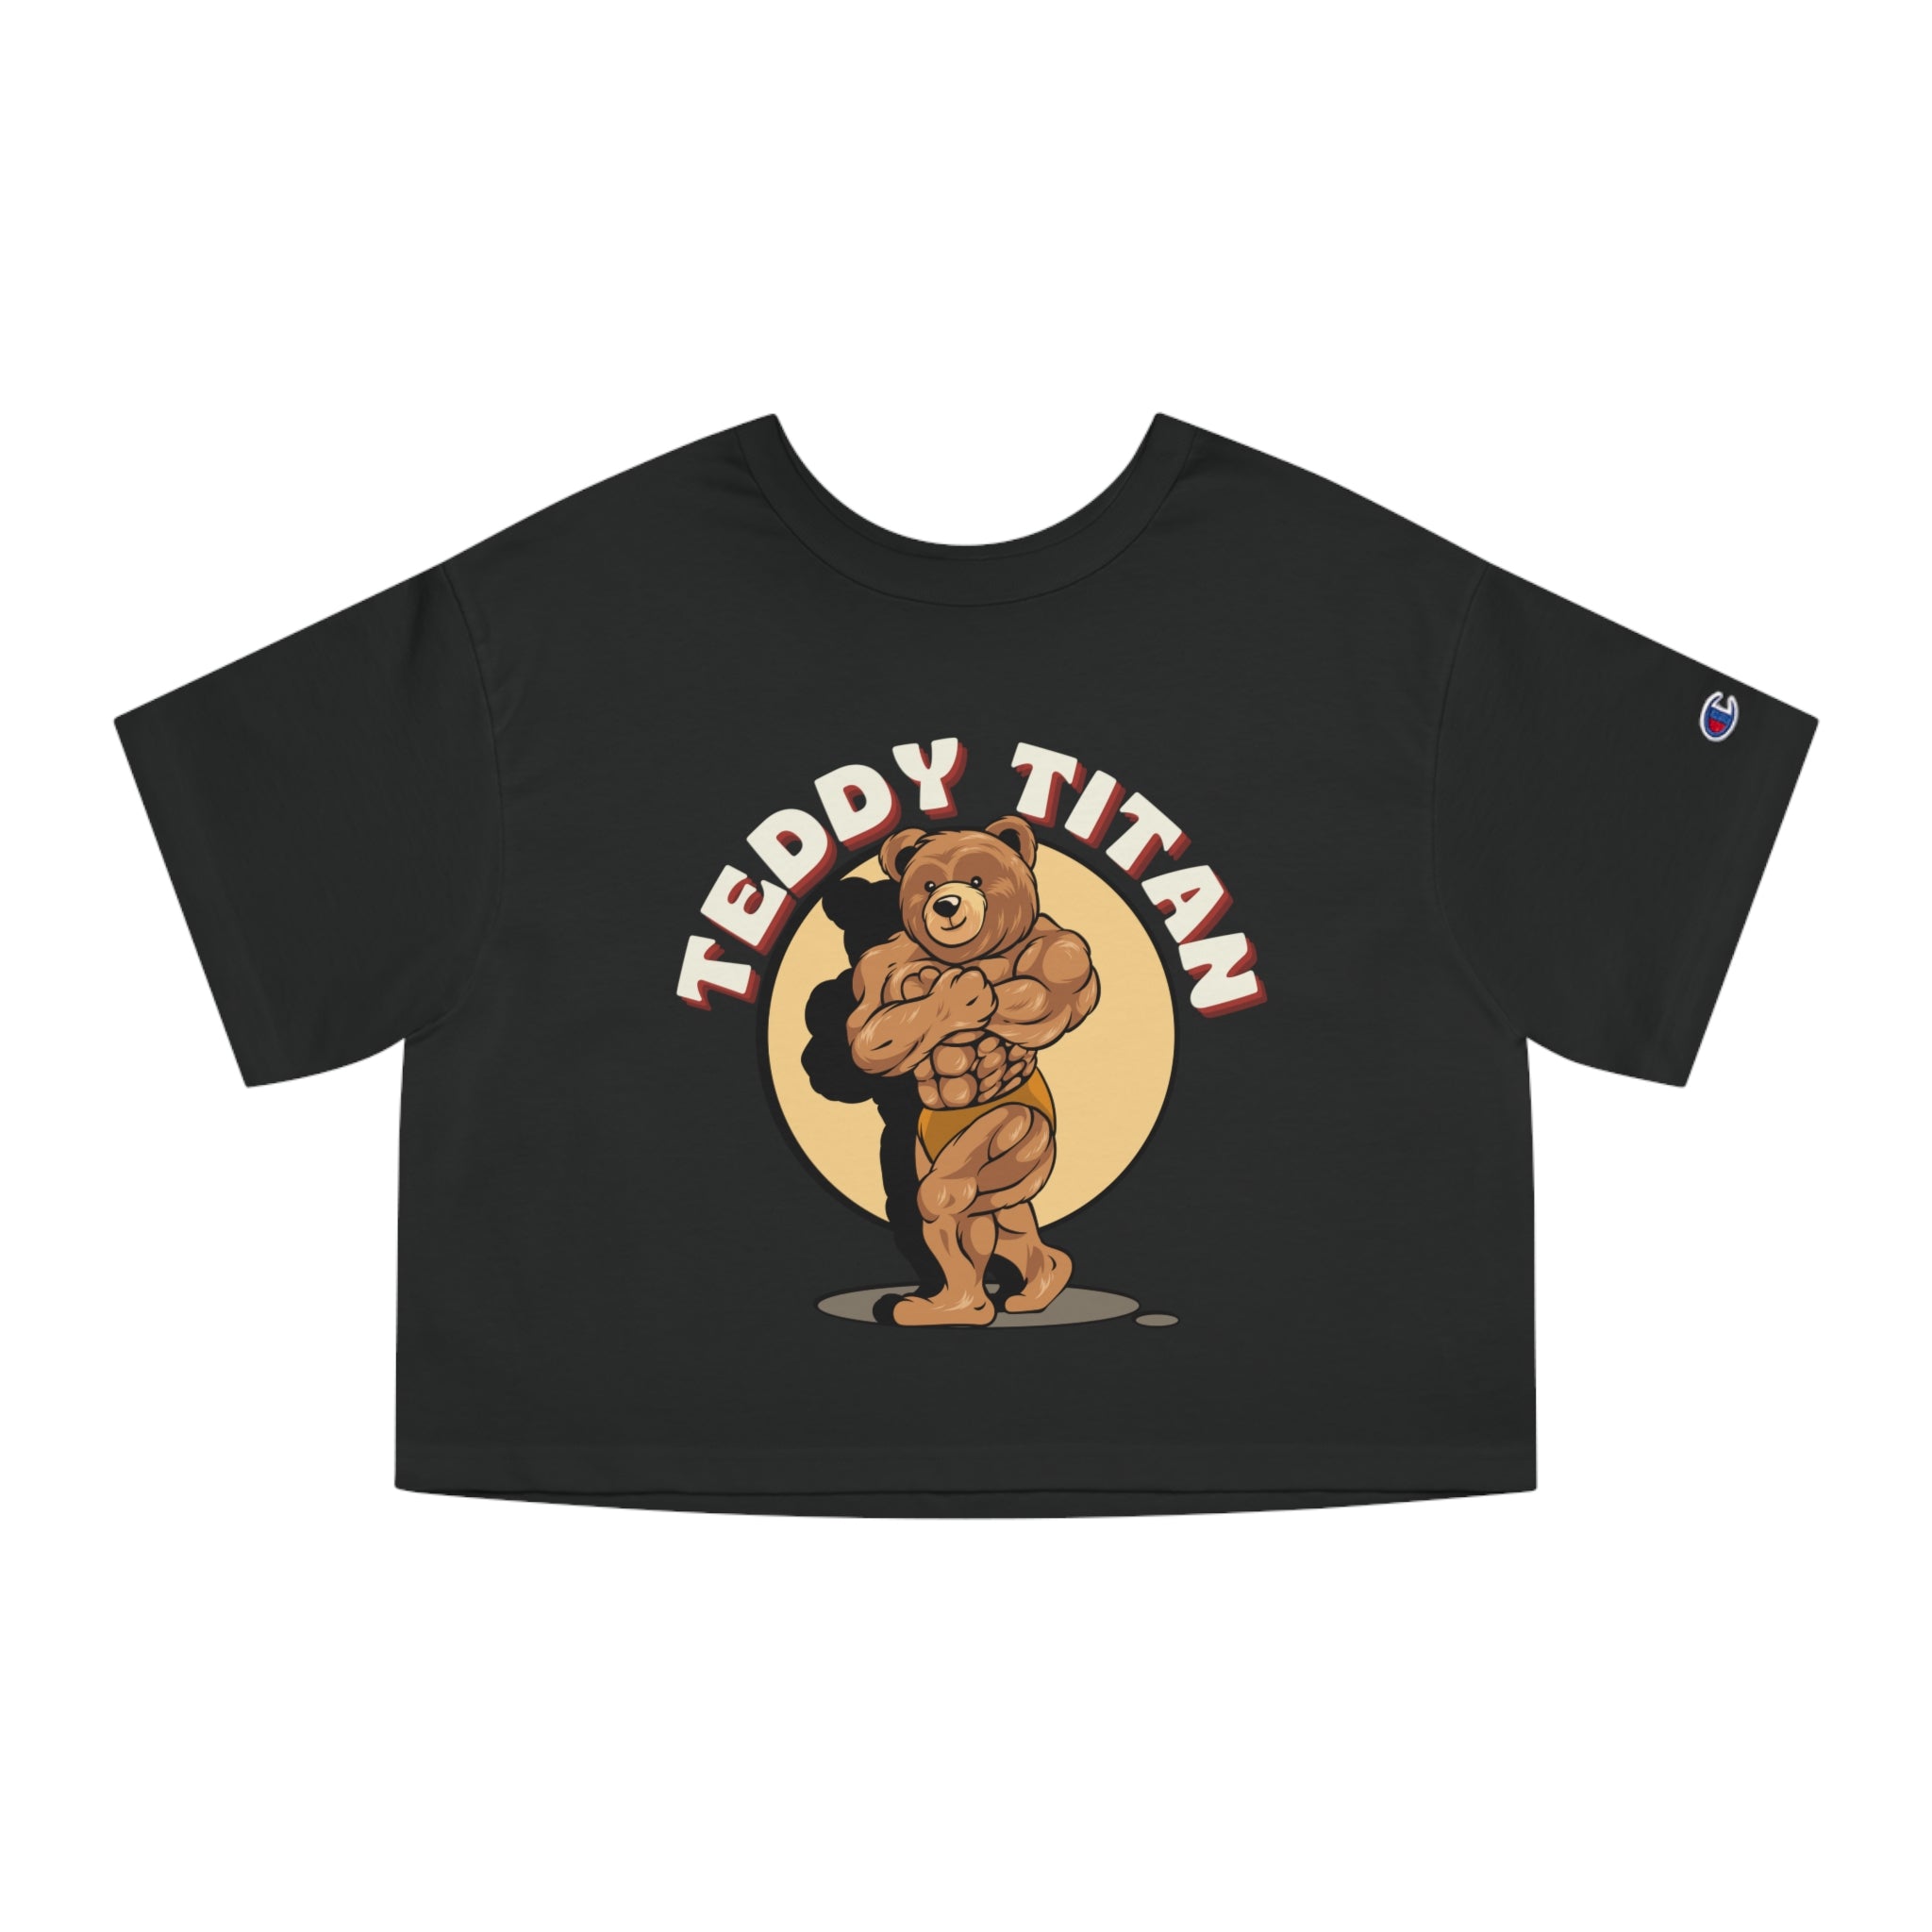 Teddy Titan Crop Top